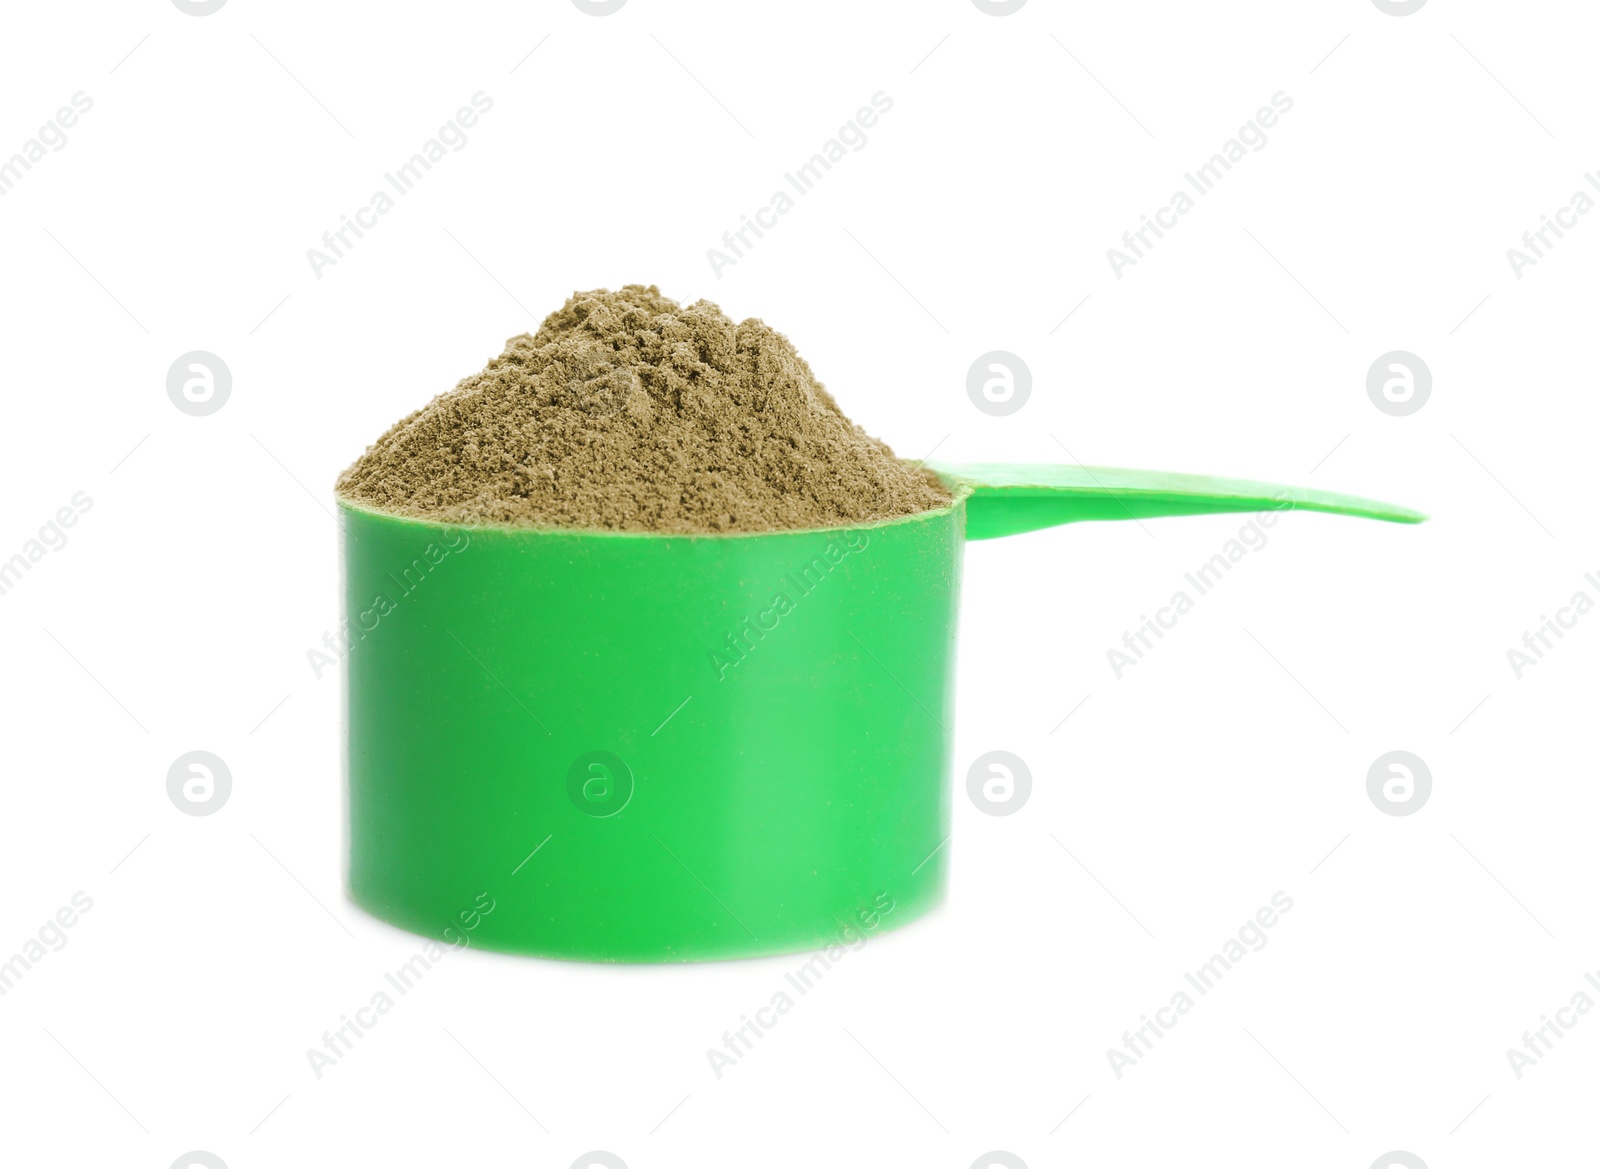 Photo of Scoop with hemp protein powder on white background